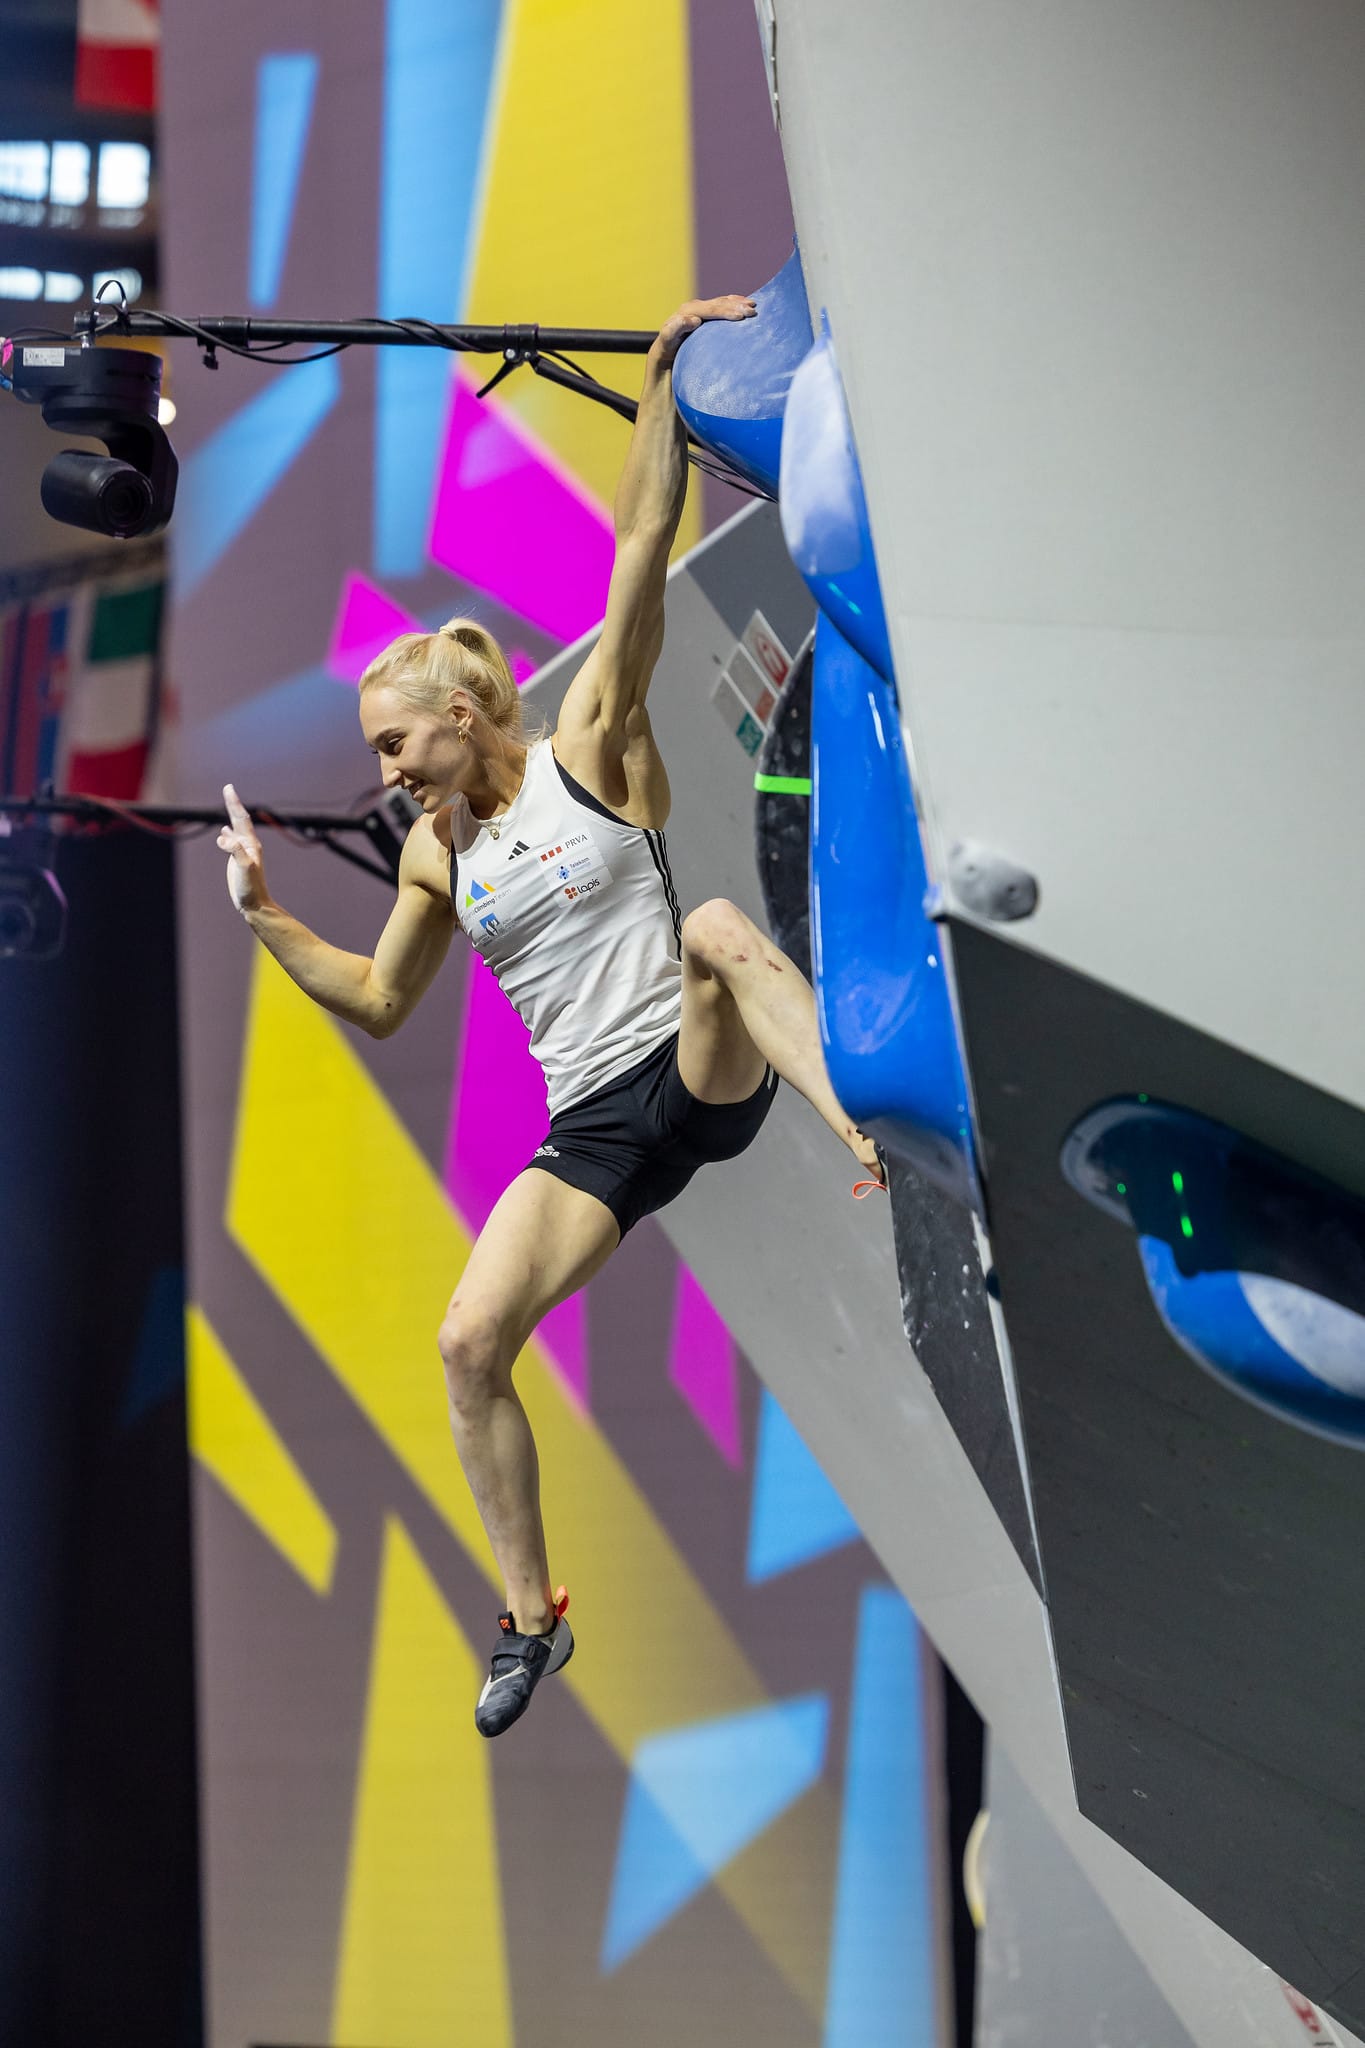 Janja Garnbret flashing boulder 3 in the Women's final on the way to winning the gold medal.